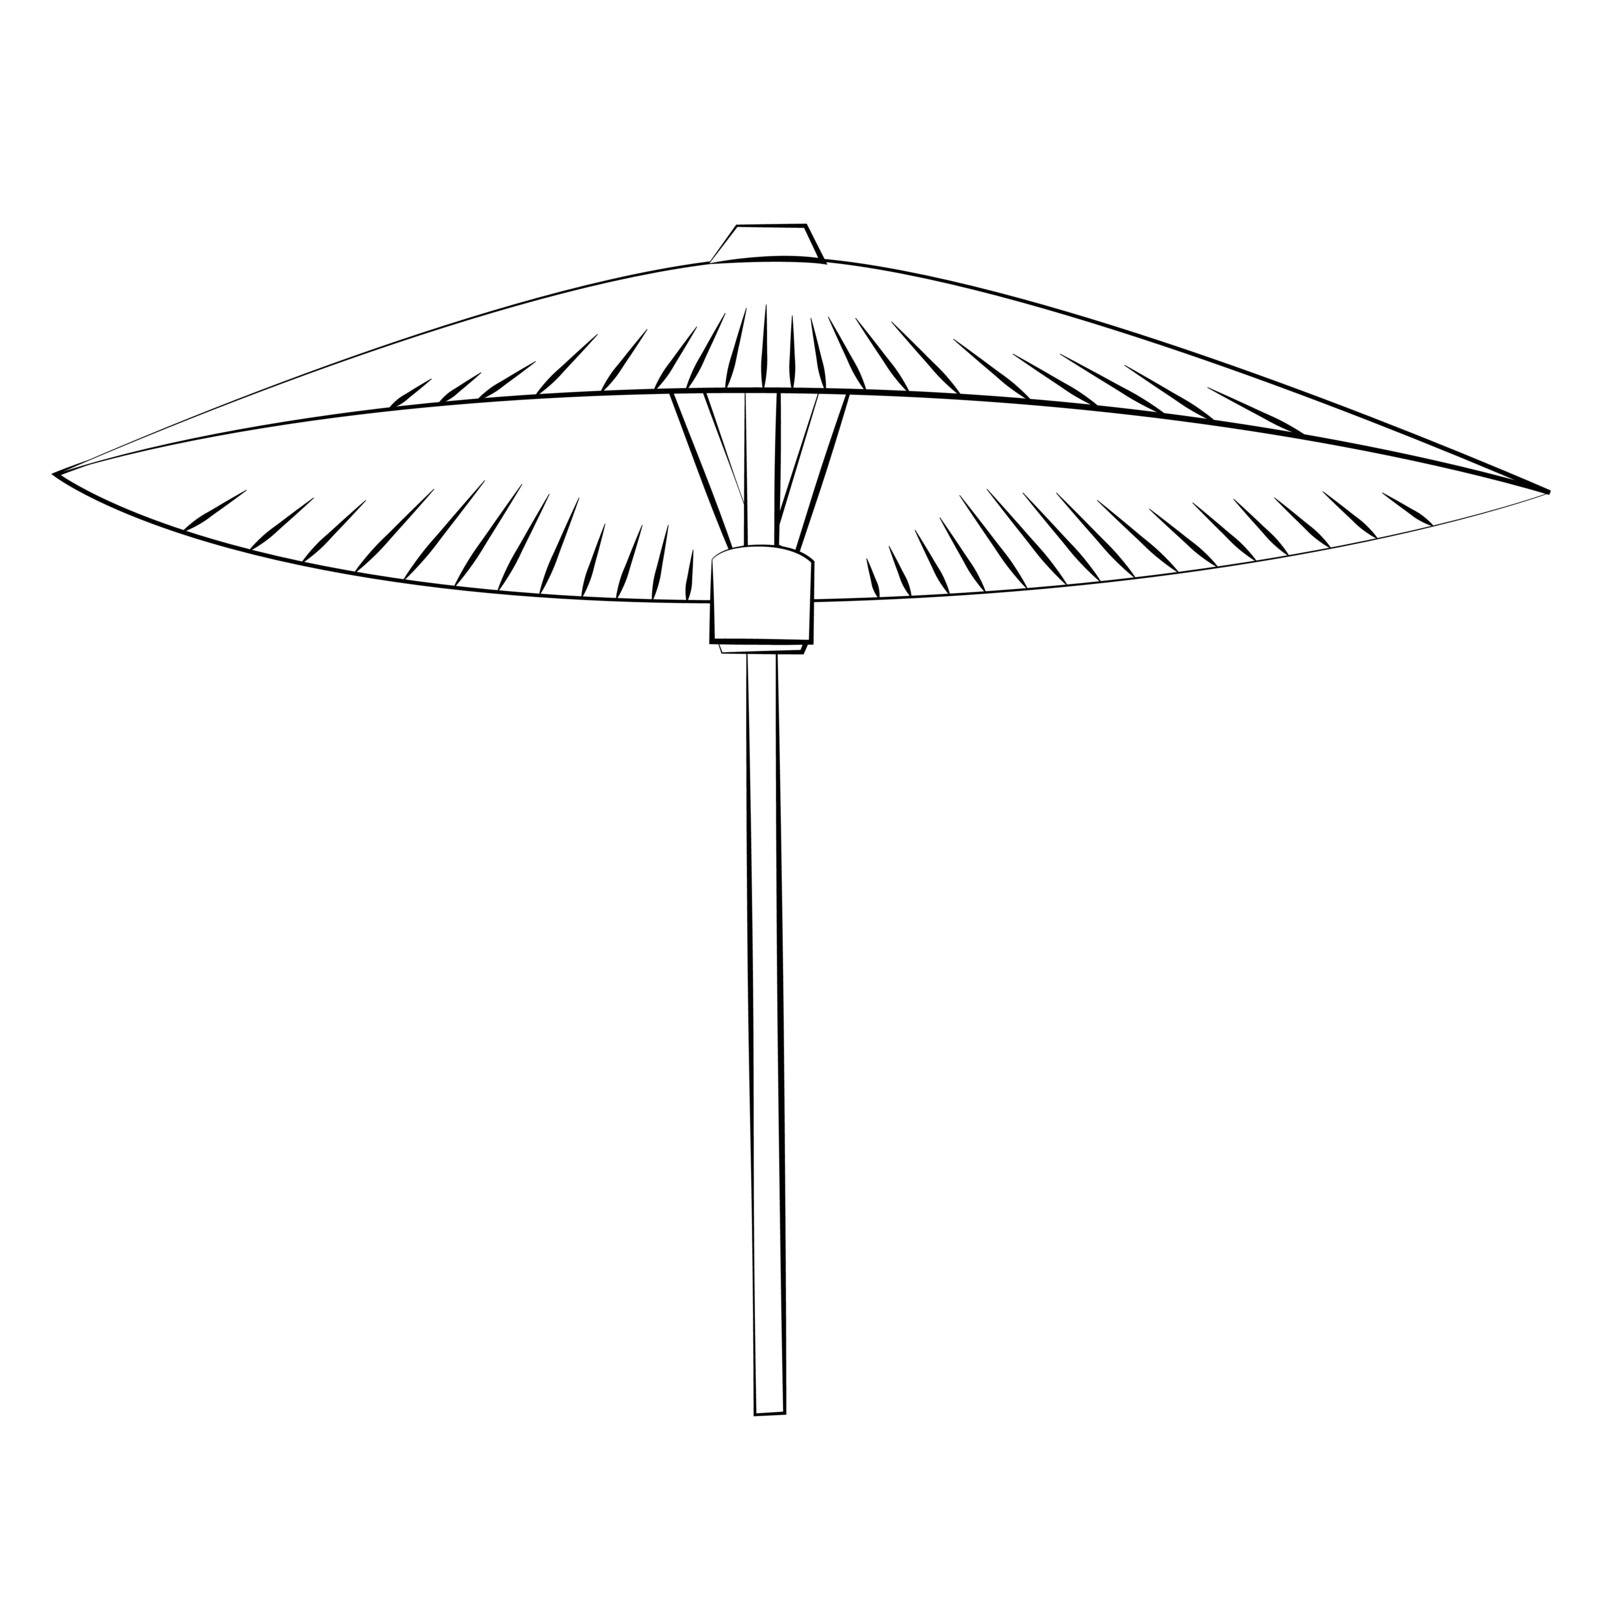 Black outline vector umbrella on white background.